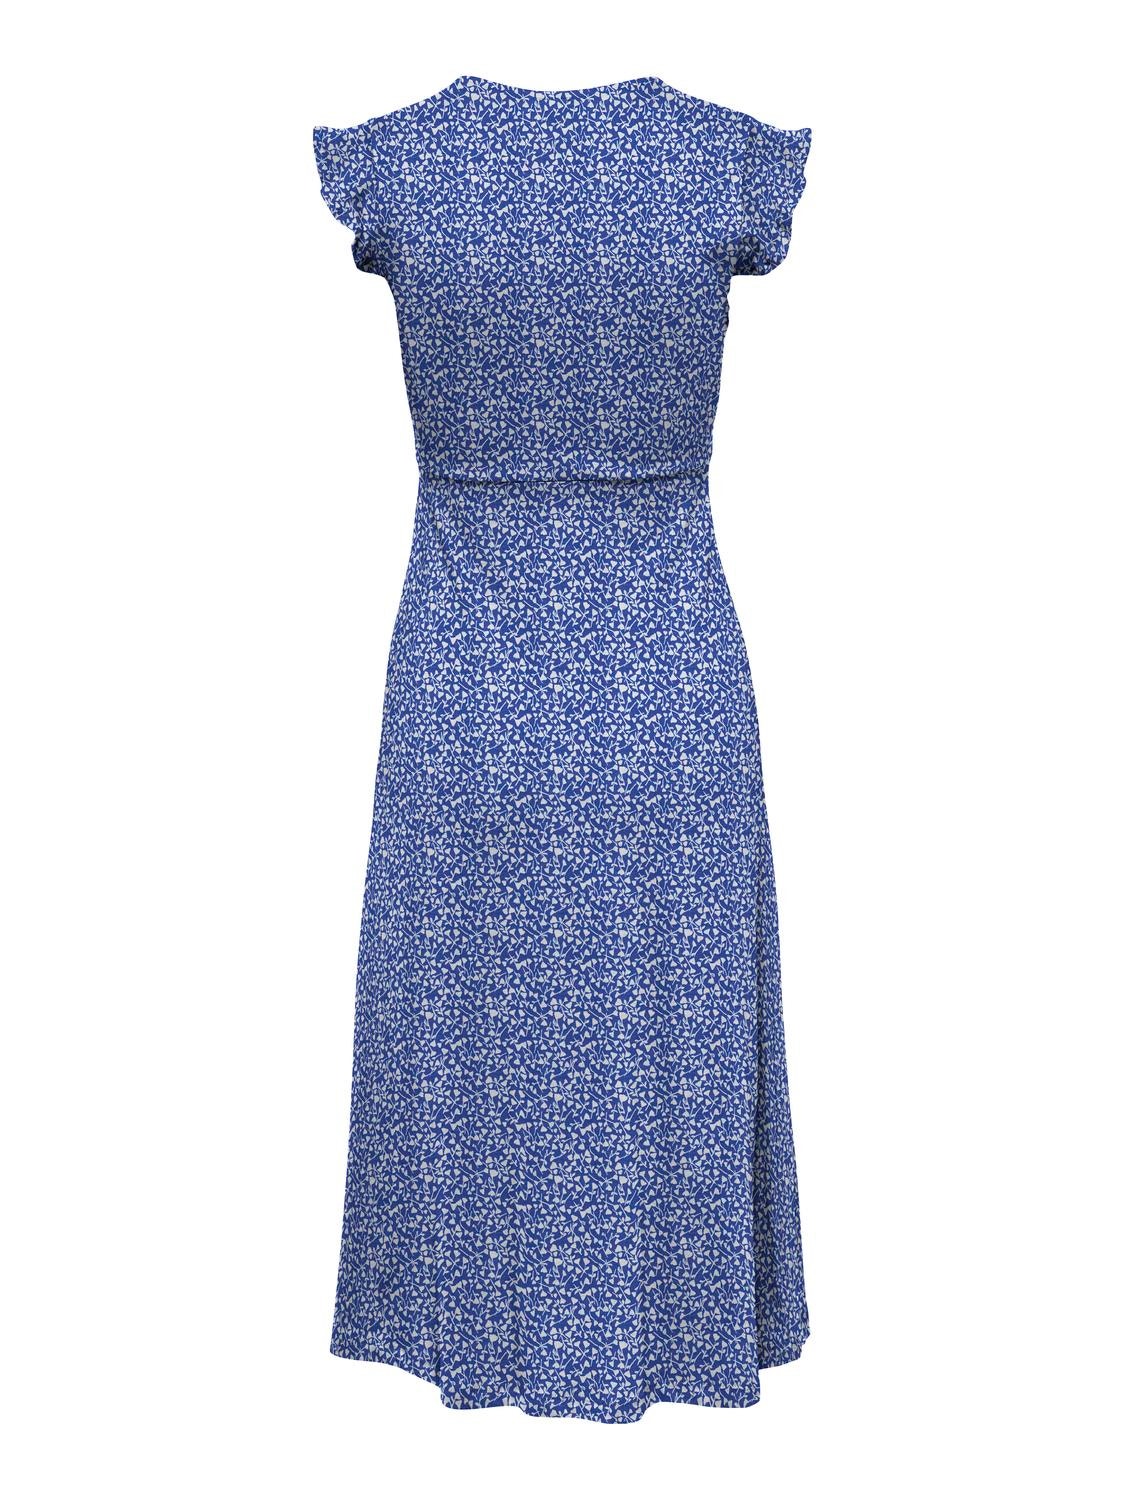 ONLY Midi Frill Dress -Dazzling Blue - 15257520